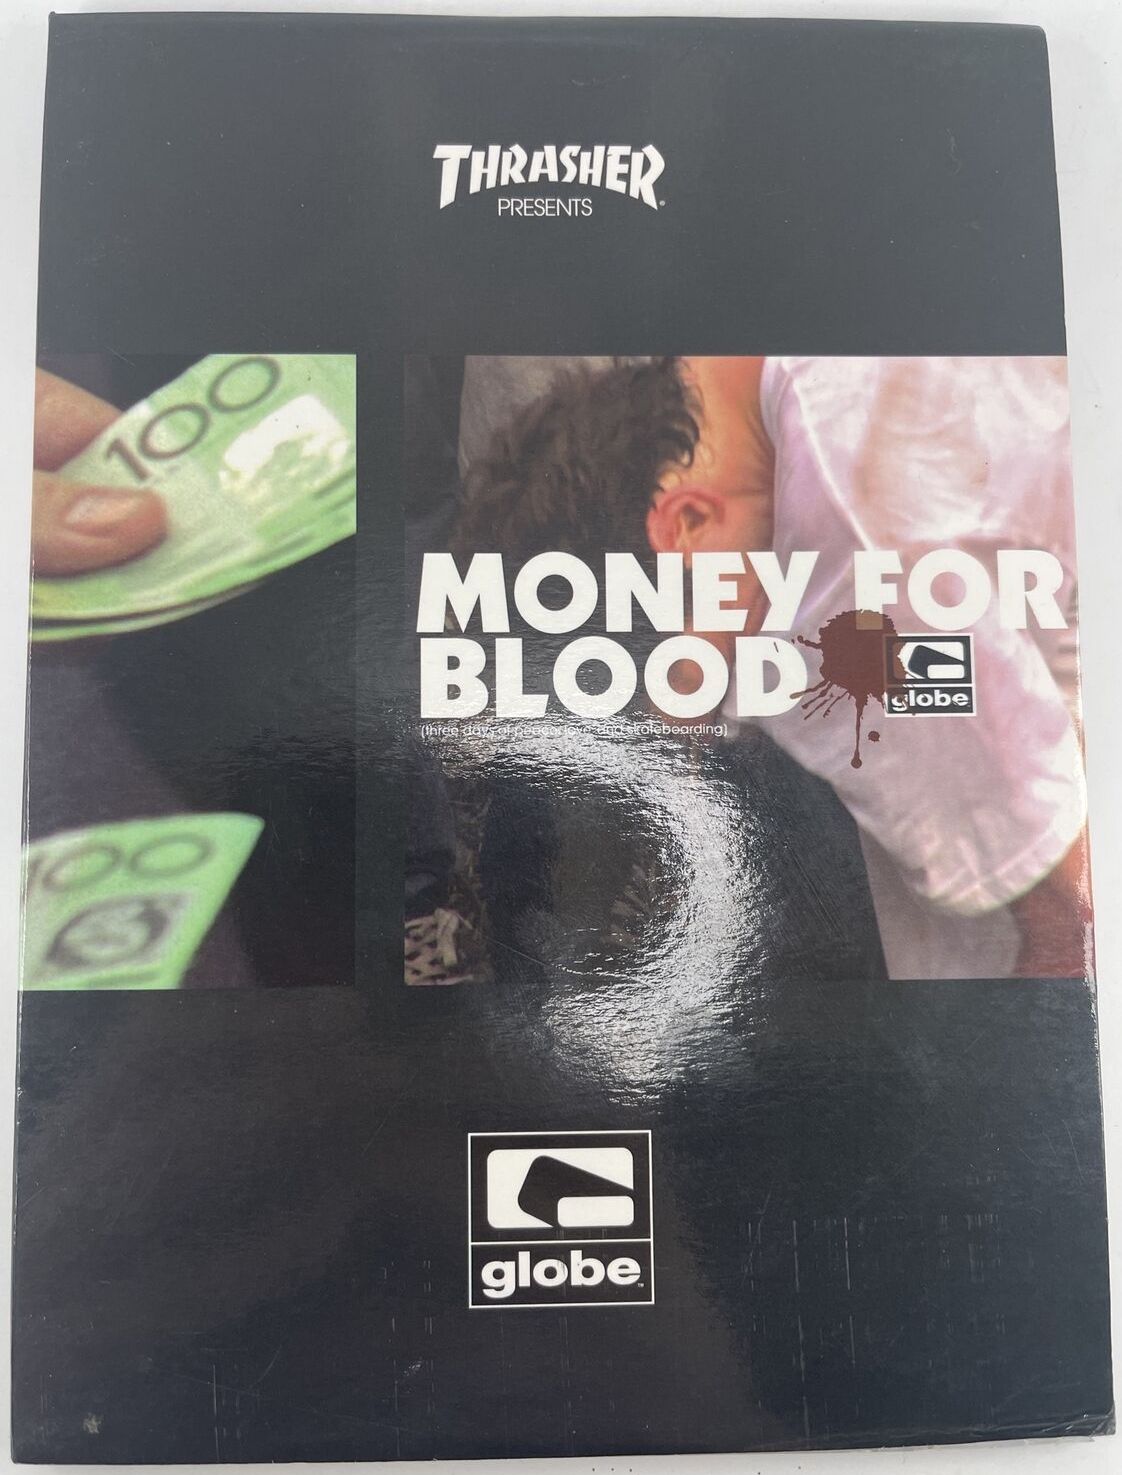 Thrasher - Money For Blood cover